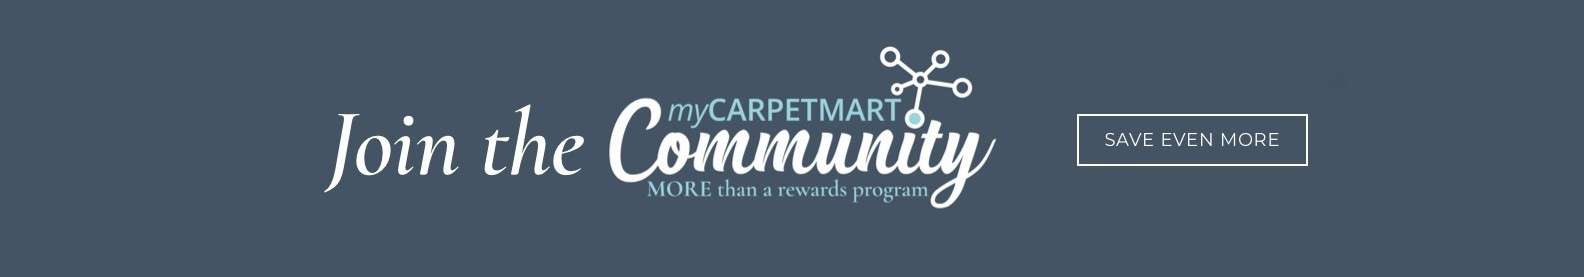 Join-the-community-financing-banner | Carpet Mart